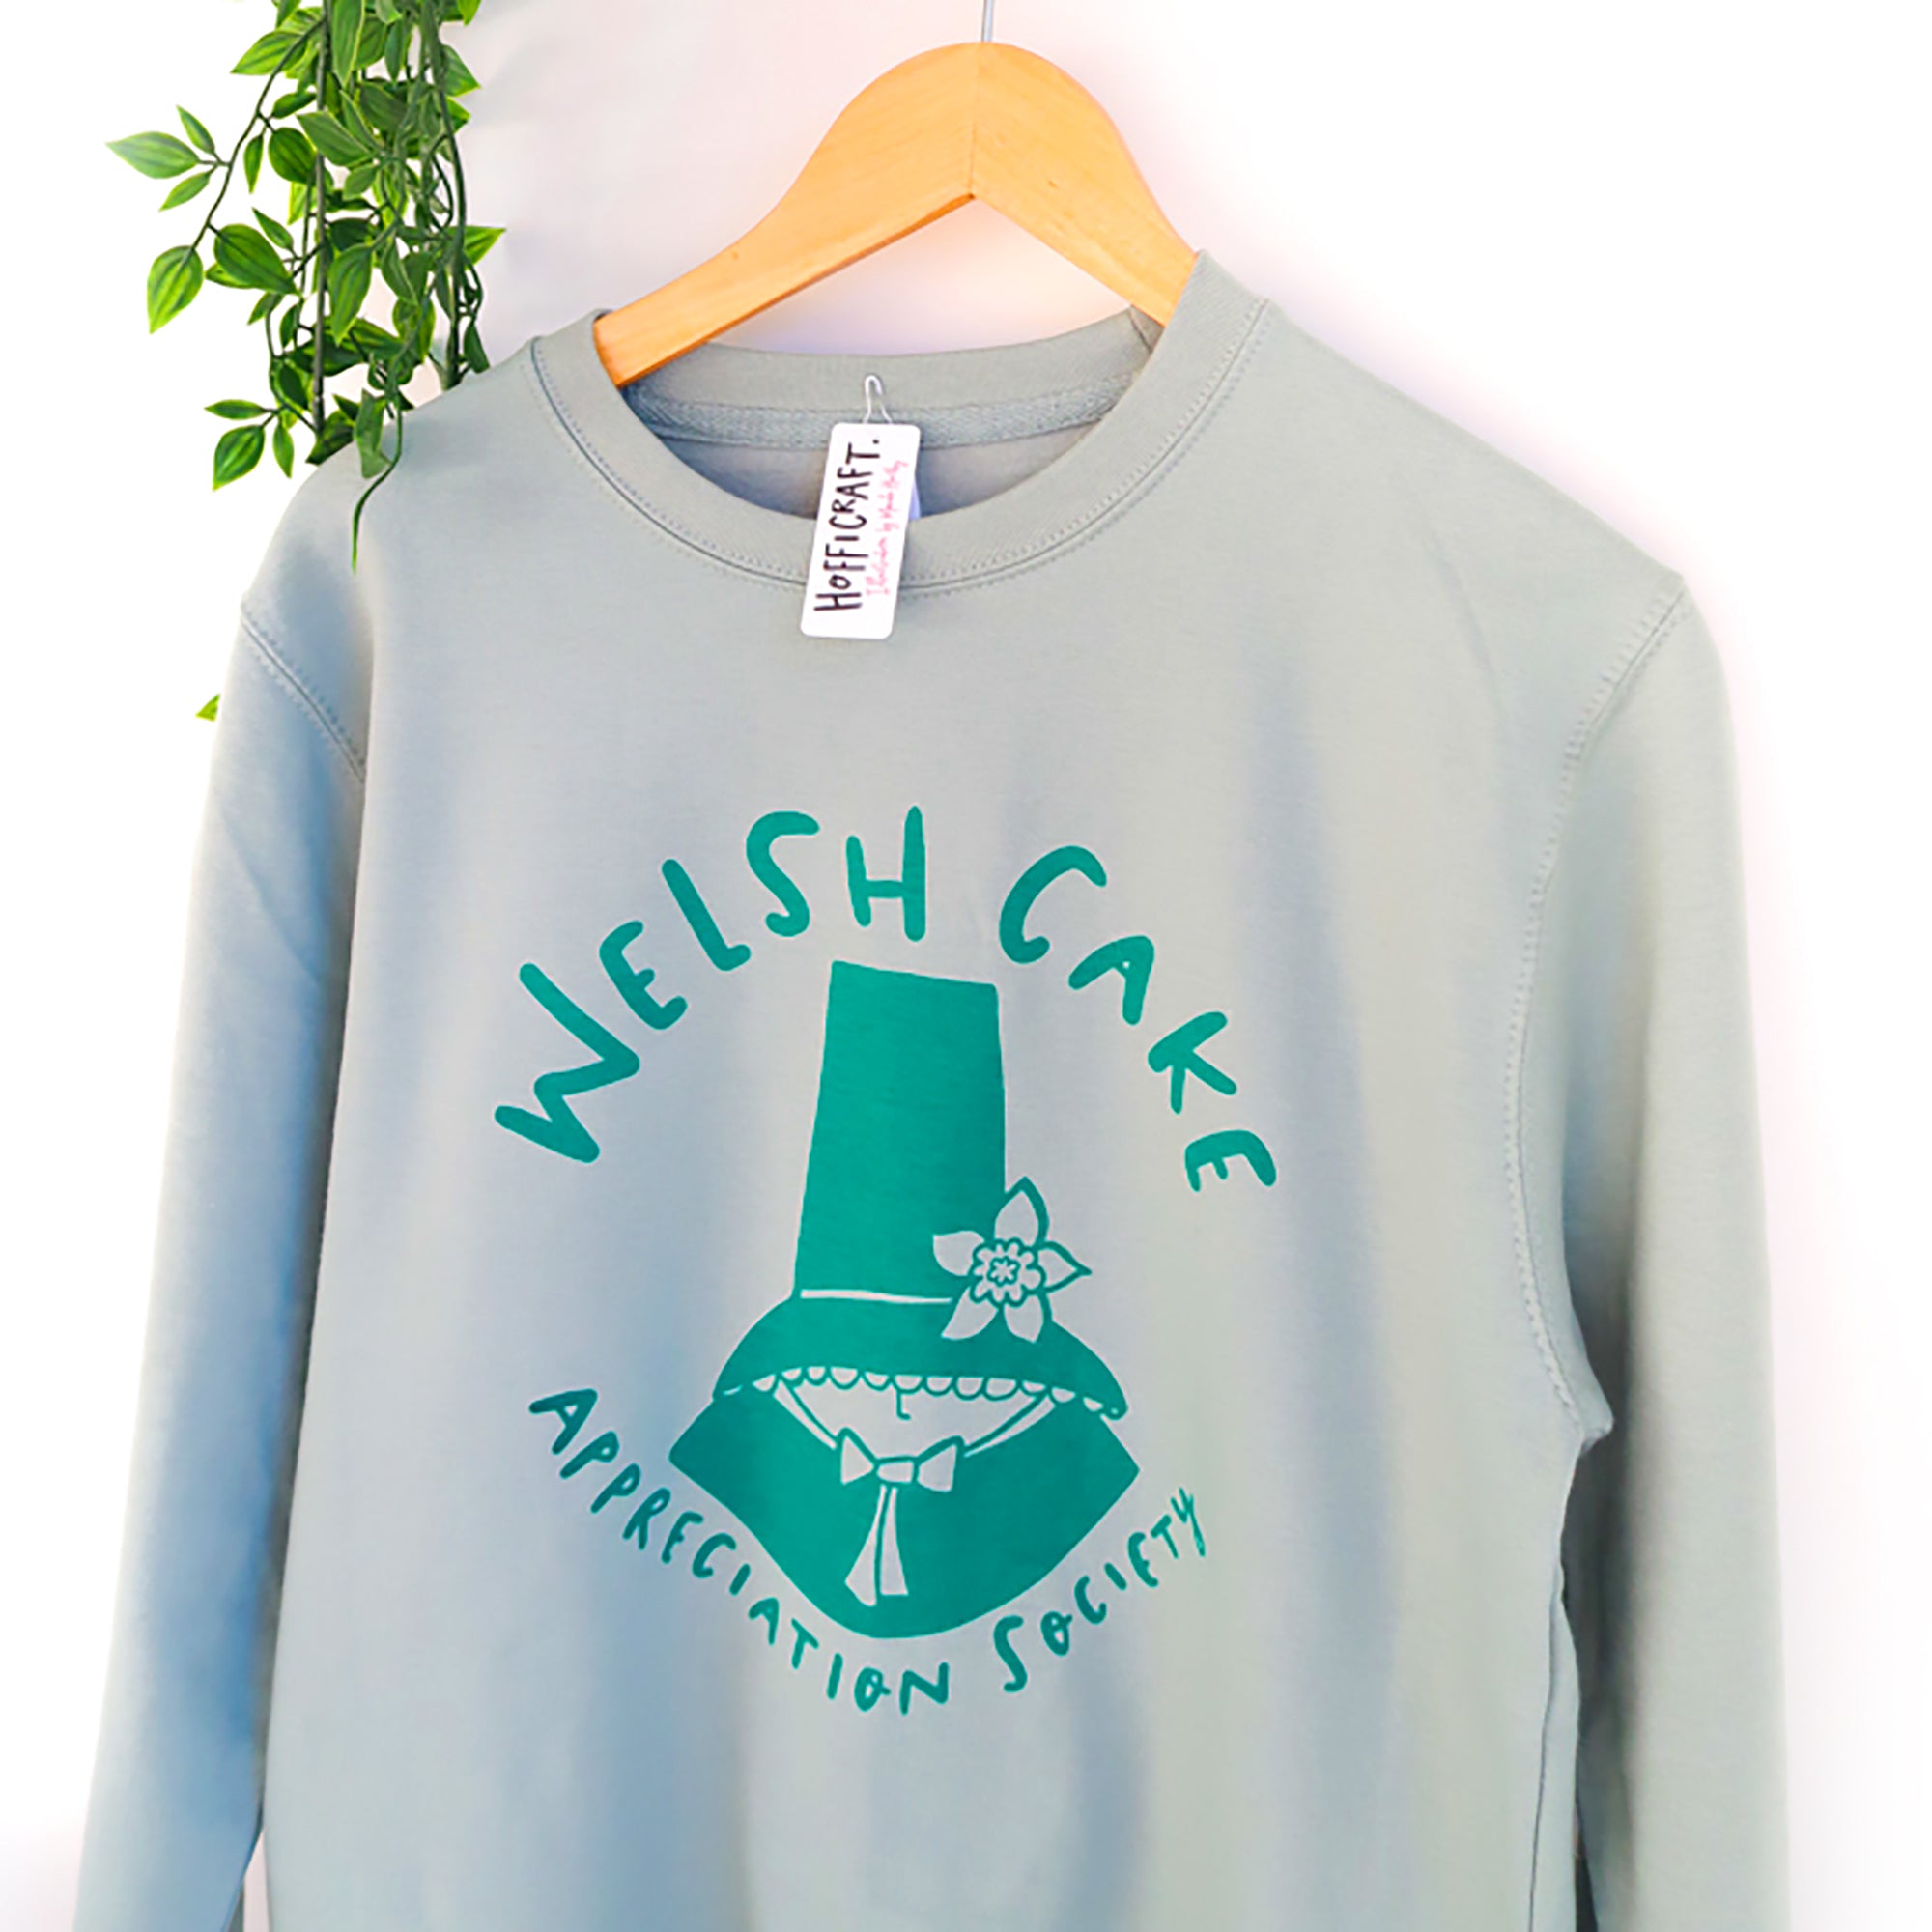 Welsh cake appreciation society sweatshirt